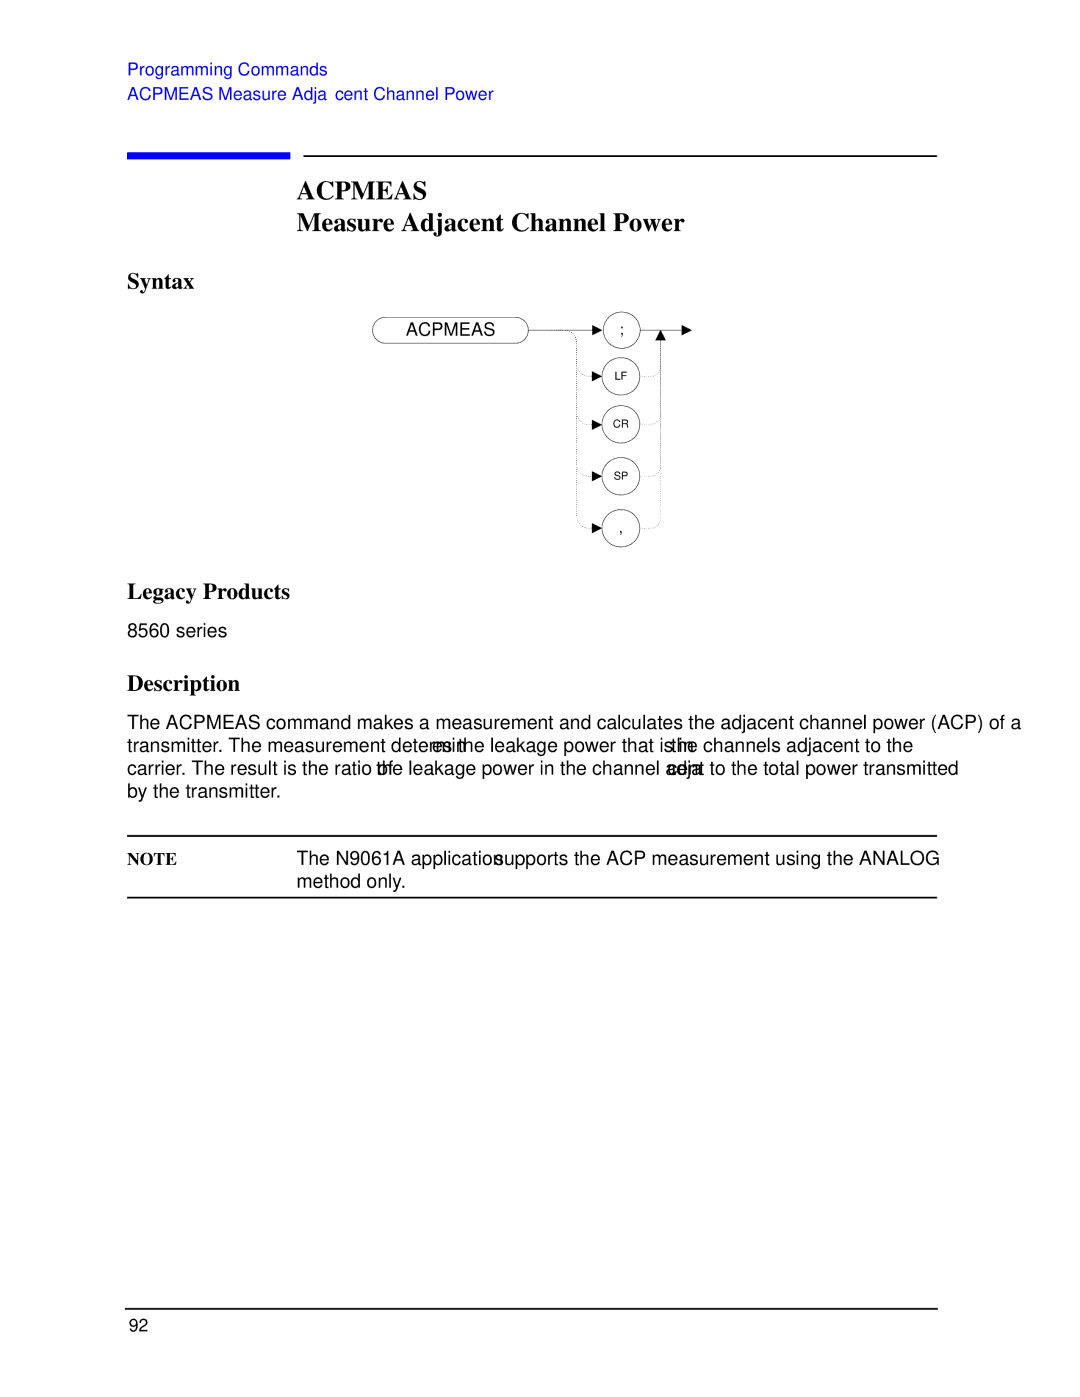 Agilent Technologies N9030a manual Acpmeas, Measure Adjacent Channel Power 